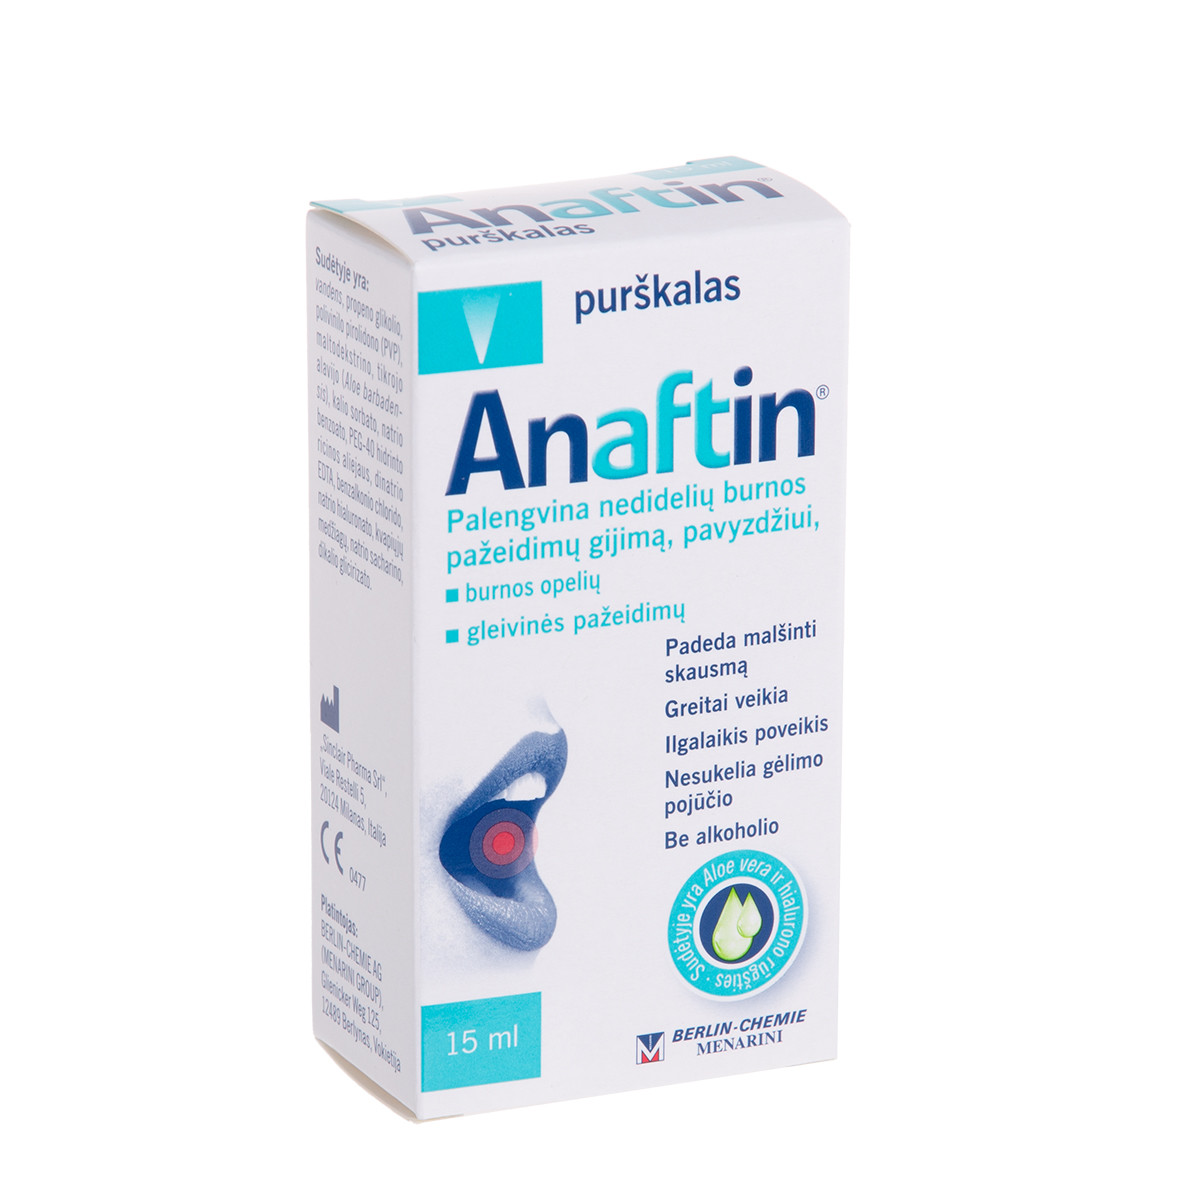 ANAFTIN, purškalas, 15 ml